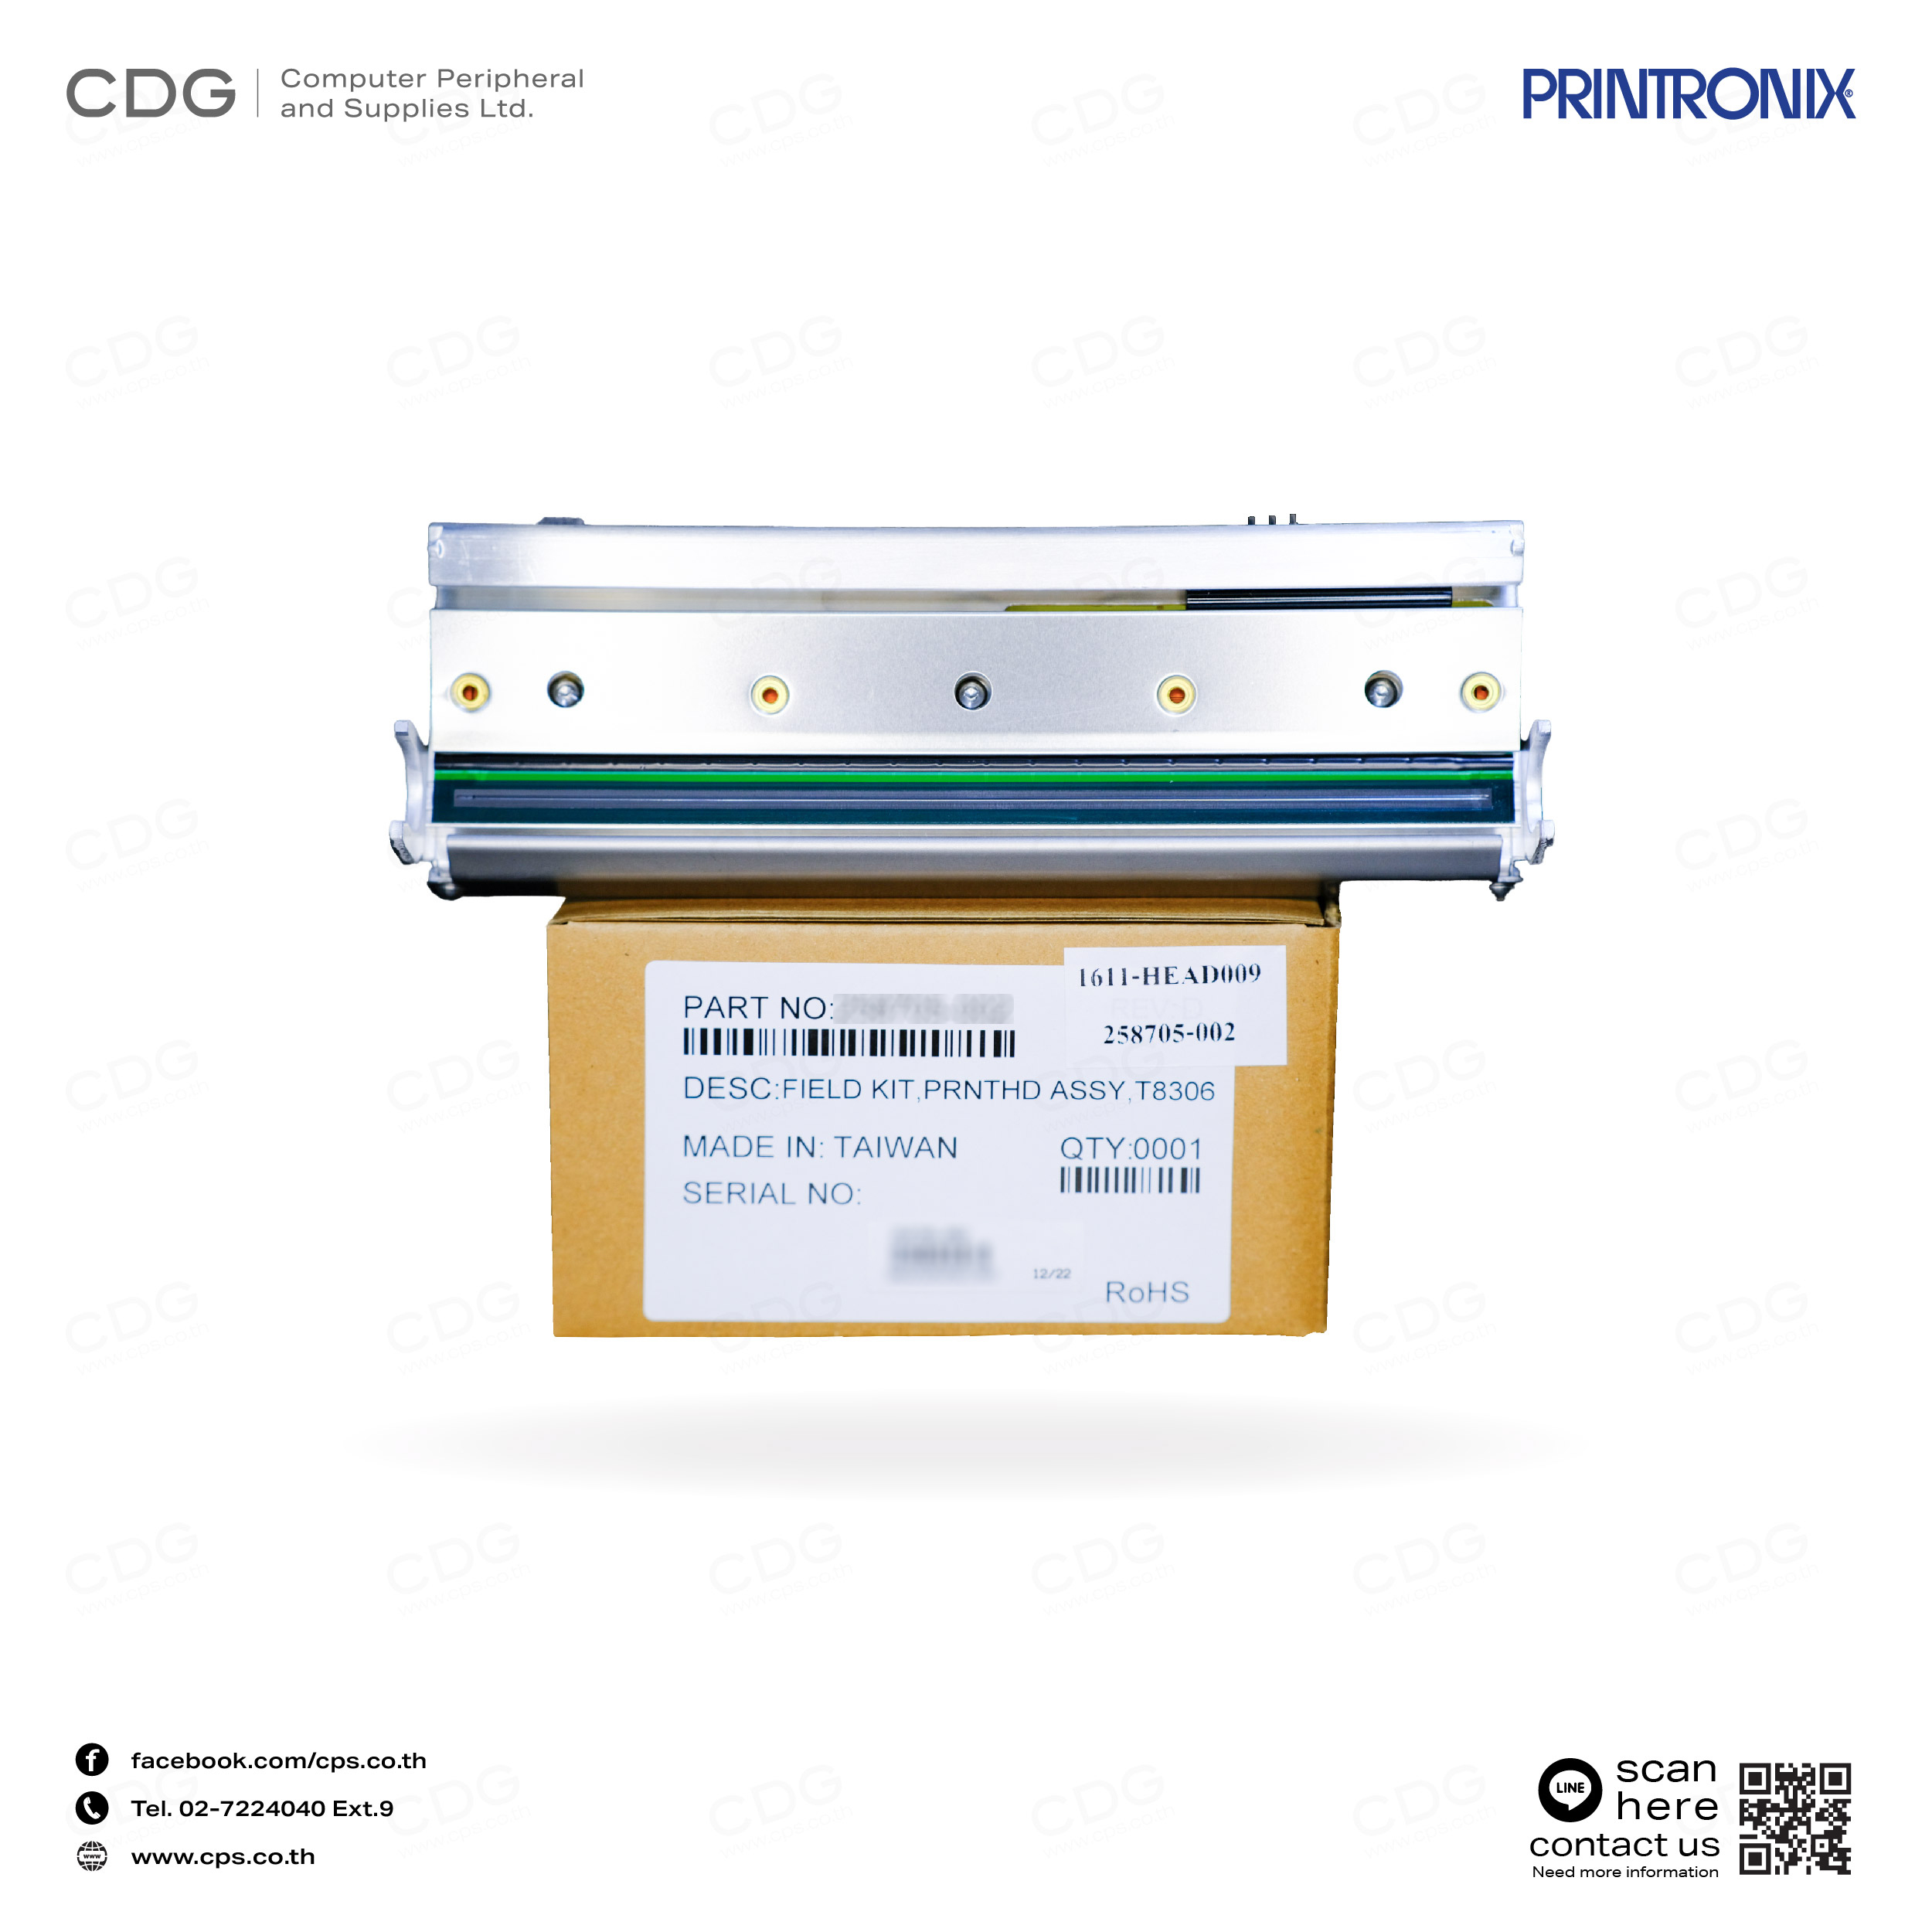 Print Head Printronix model T8306 (300DPI) 6 inches